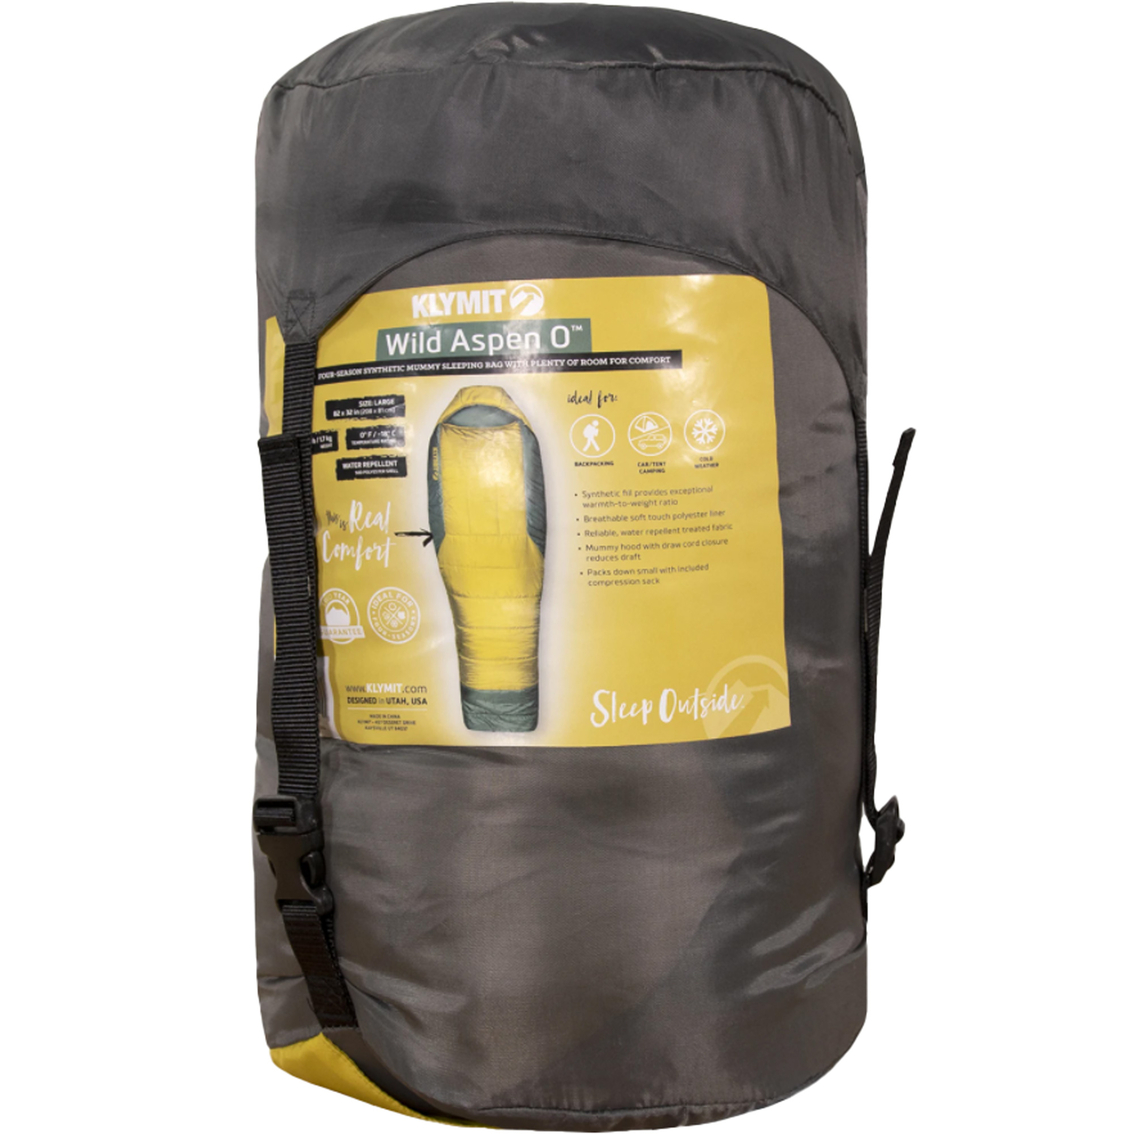 Klymit Wild Aspen 0 Regular Sleeping Bag | Sleeping Bags & Bedding 